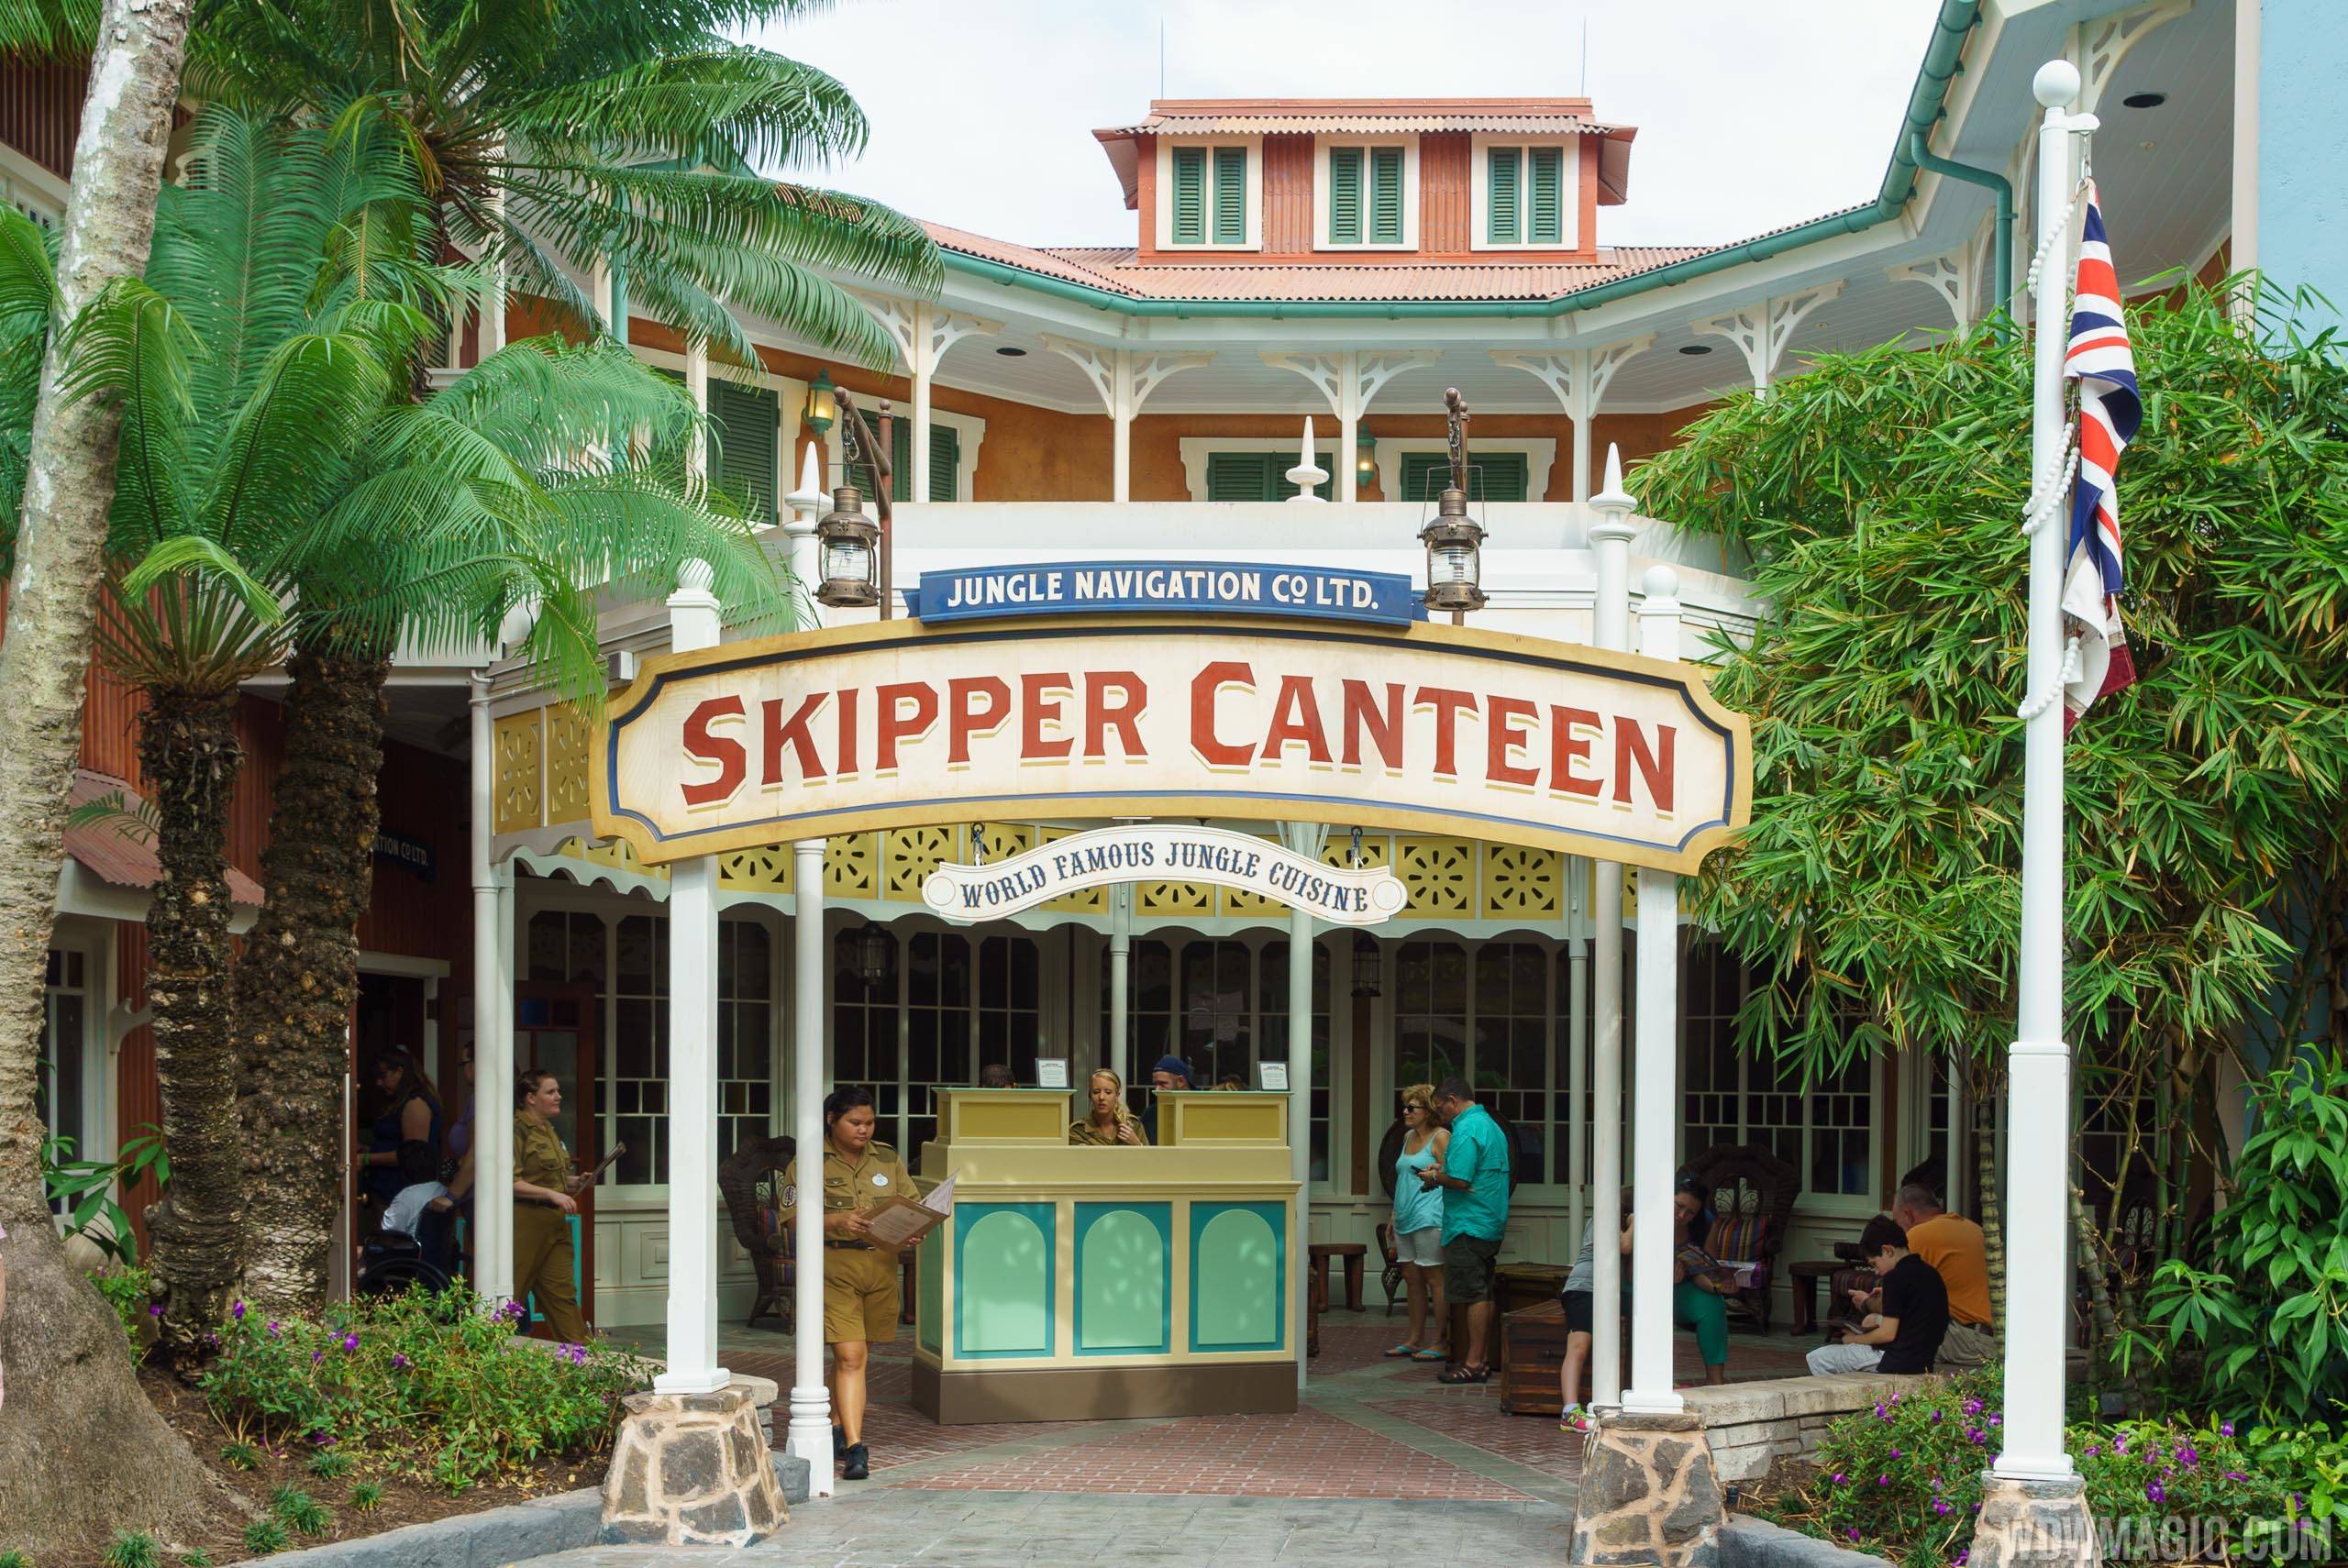 REVIEW - Jungle Cruise Skipper Canteen at the Magic Kingdom